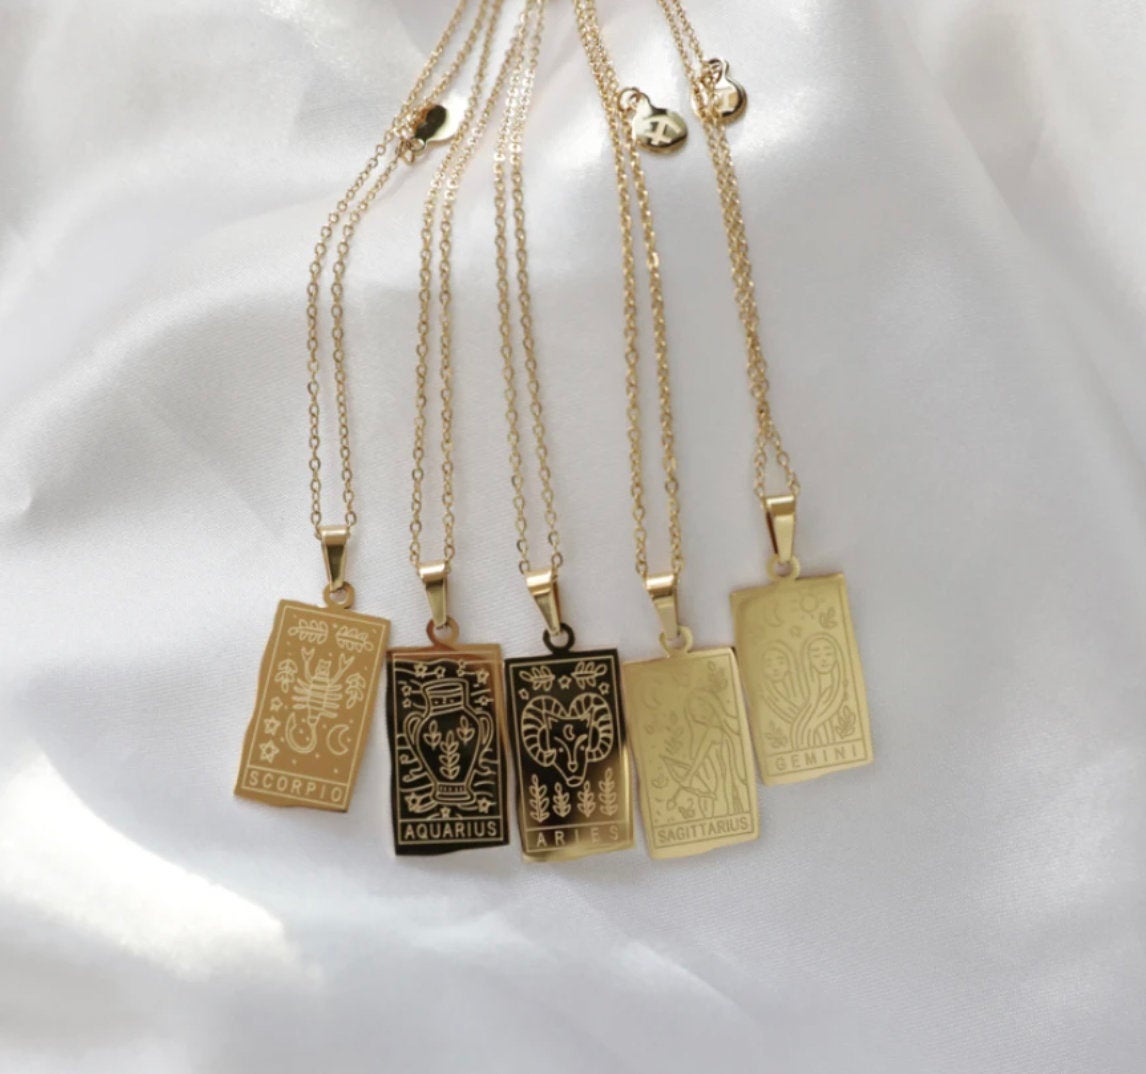 Zodiac Tarot Necklace - 18k Gold Plated Stainless Steel - Zodiac Gold Pendant, Zodiac Sign Jewelry, Astrology Necklace Gift